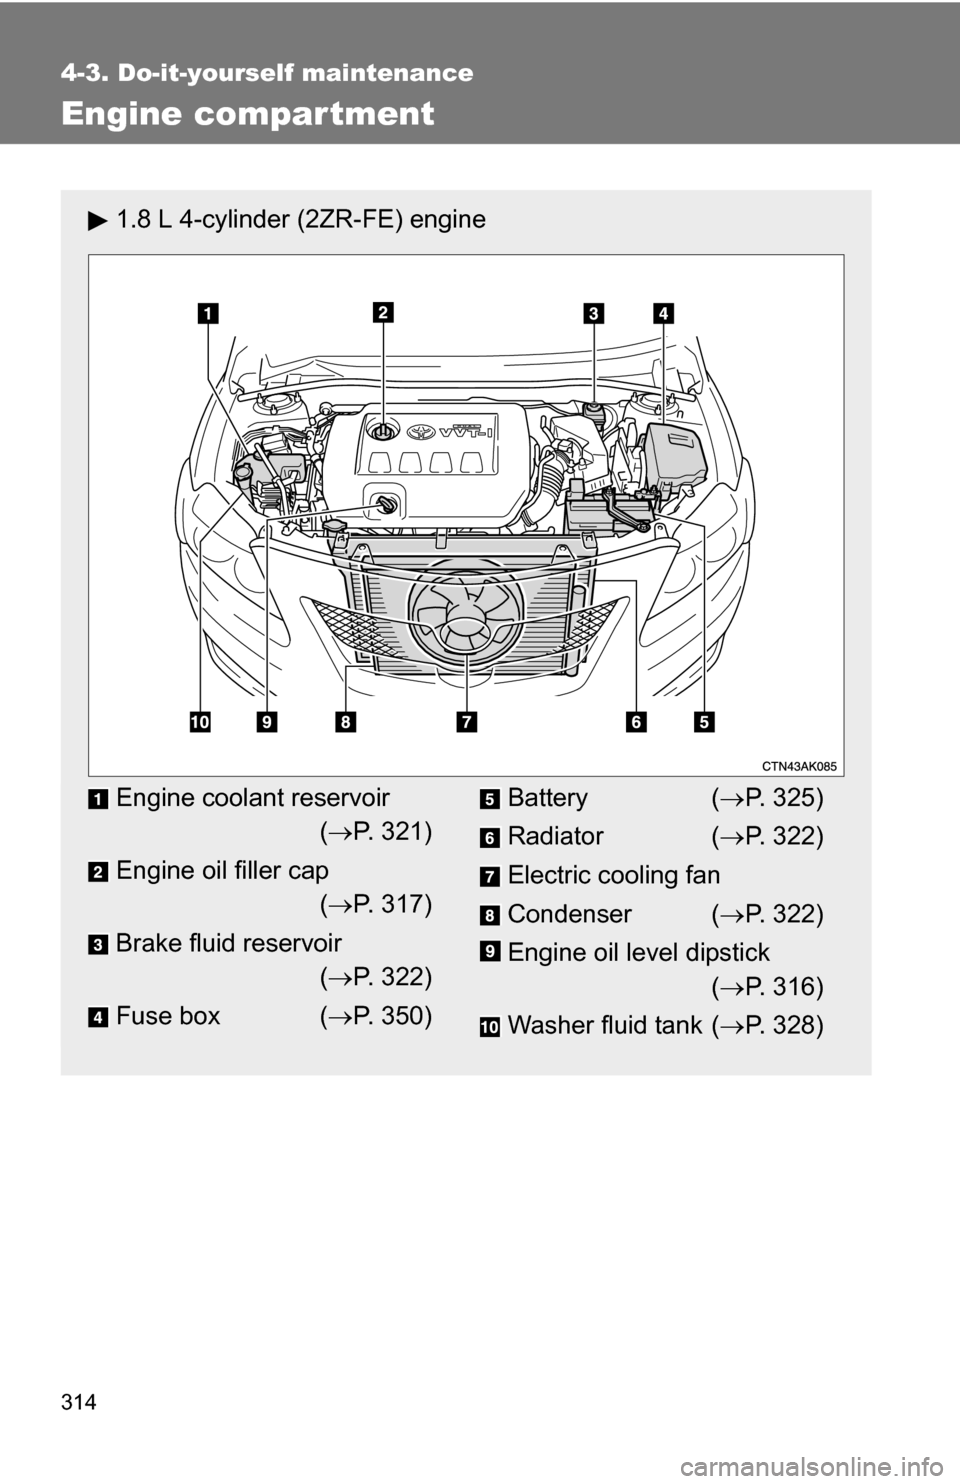 TOYOTA COROLLA 2010 10.G Owners Manual 314
4-3. Do-it-yourself maintenance
Engine compar tment
1.8 L 4-cylinder (2ZR-FE) engine
Engine coolant reservoir( P. 321)
Engine oil filler cap ( P. 317)
Brake fluid reservoir ( P. 322)
Fuse